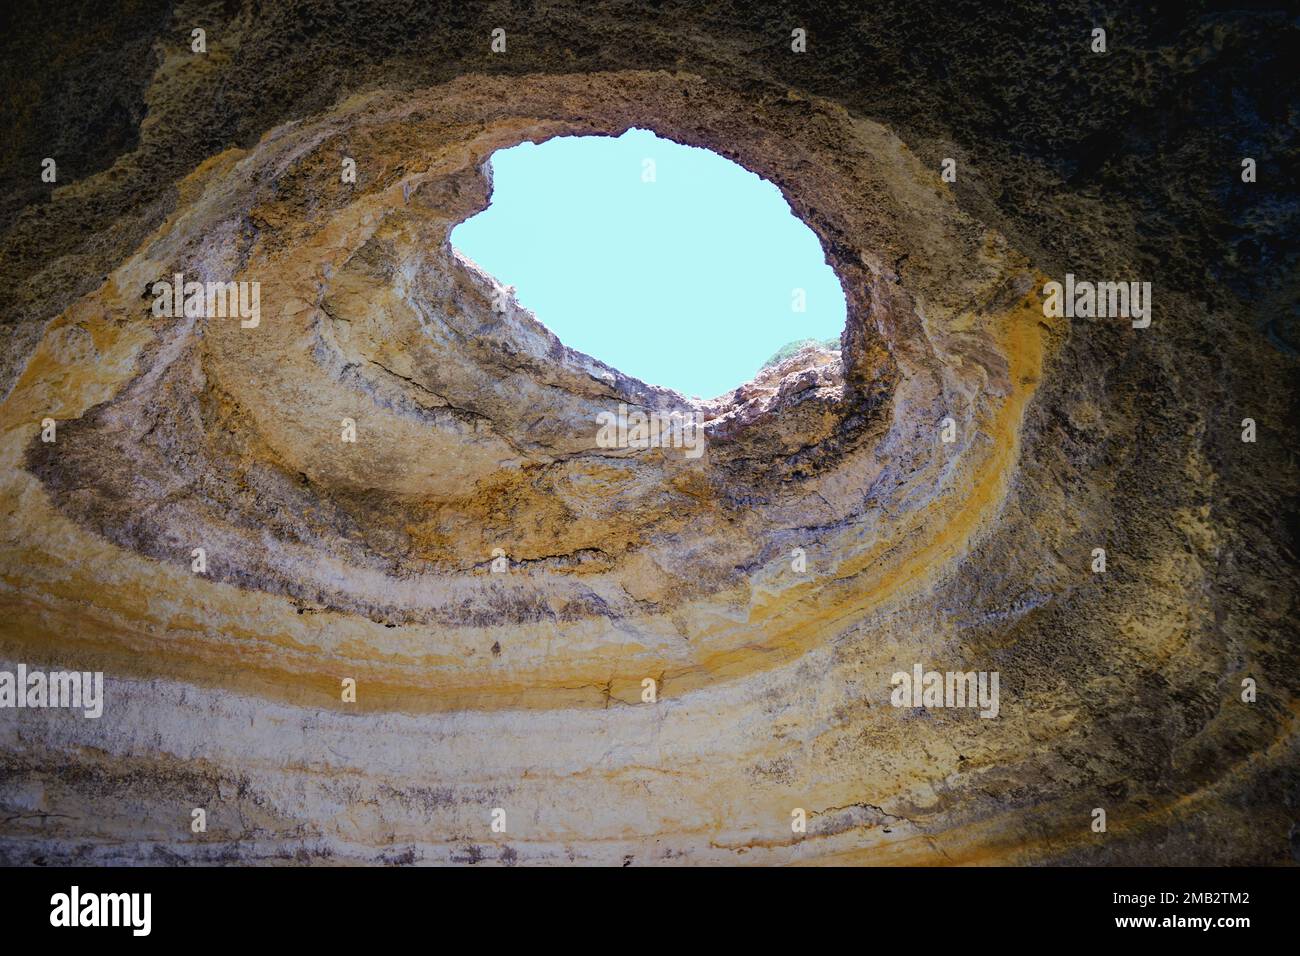 The scenic Algar de Benagil cave in Portugal Stock Photo